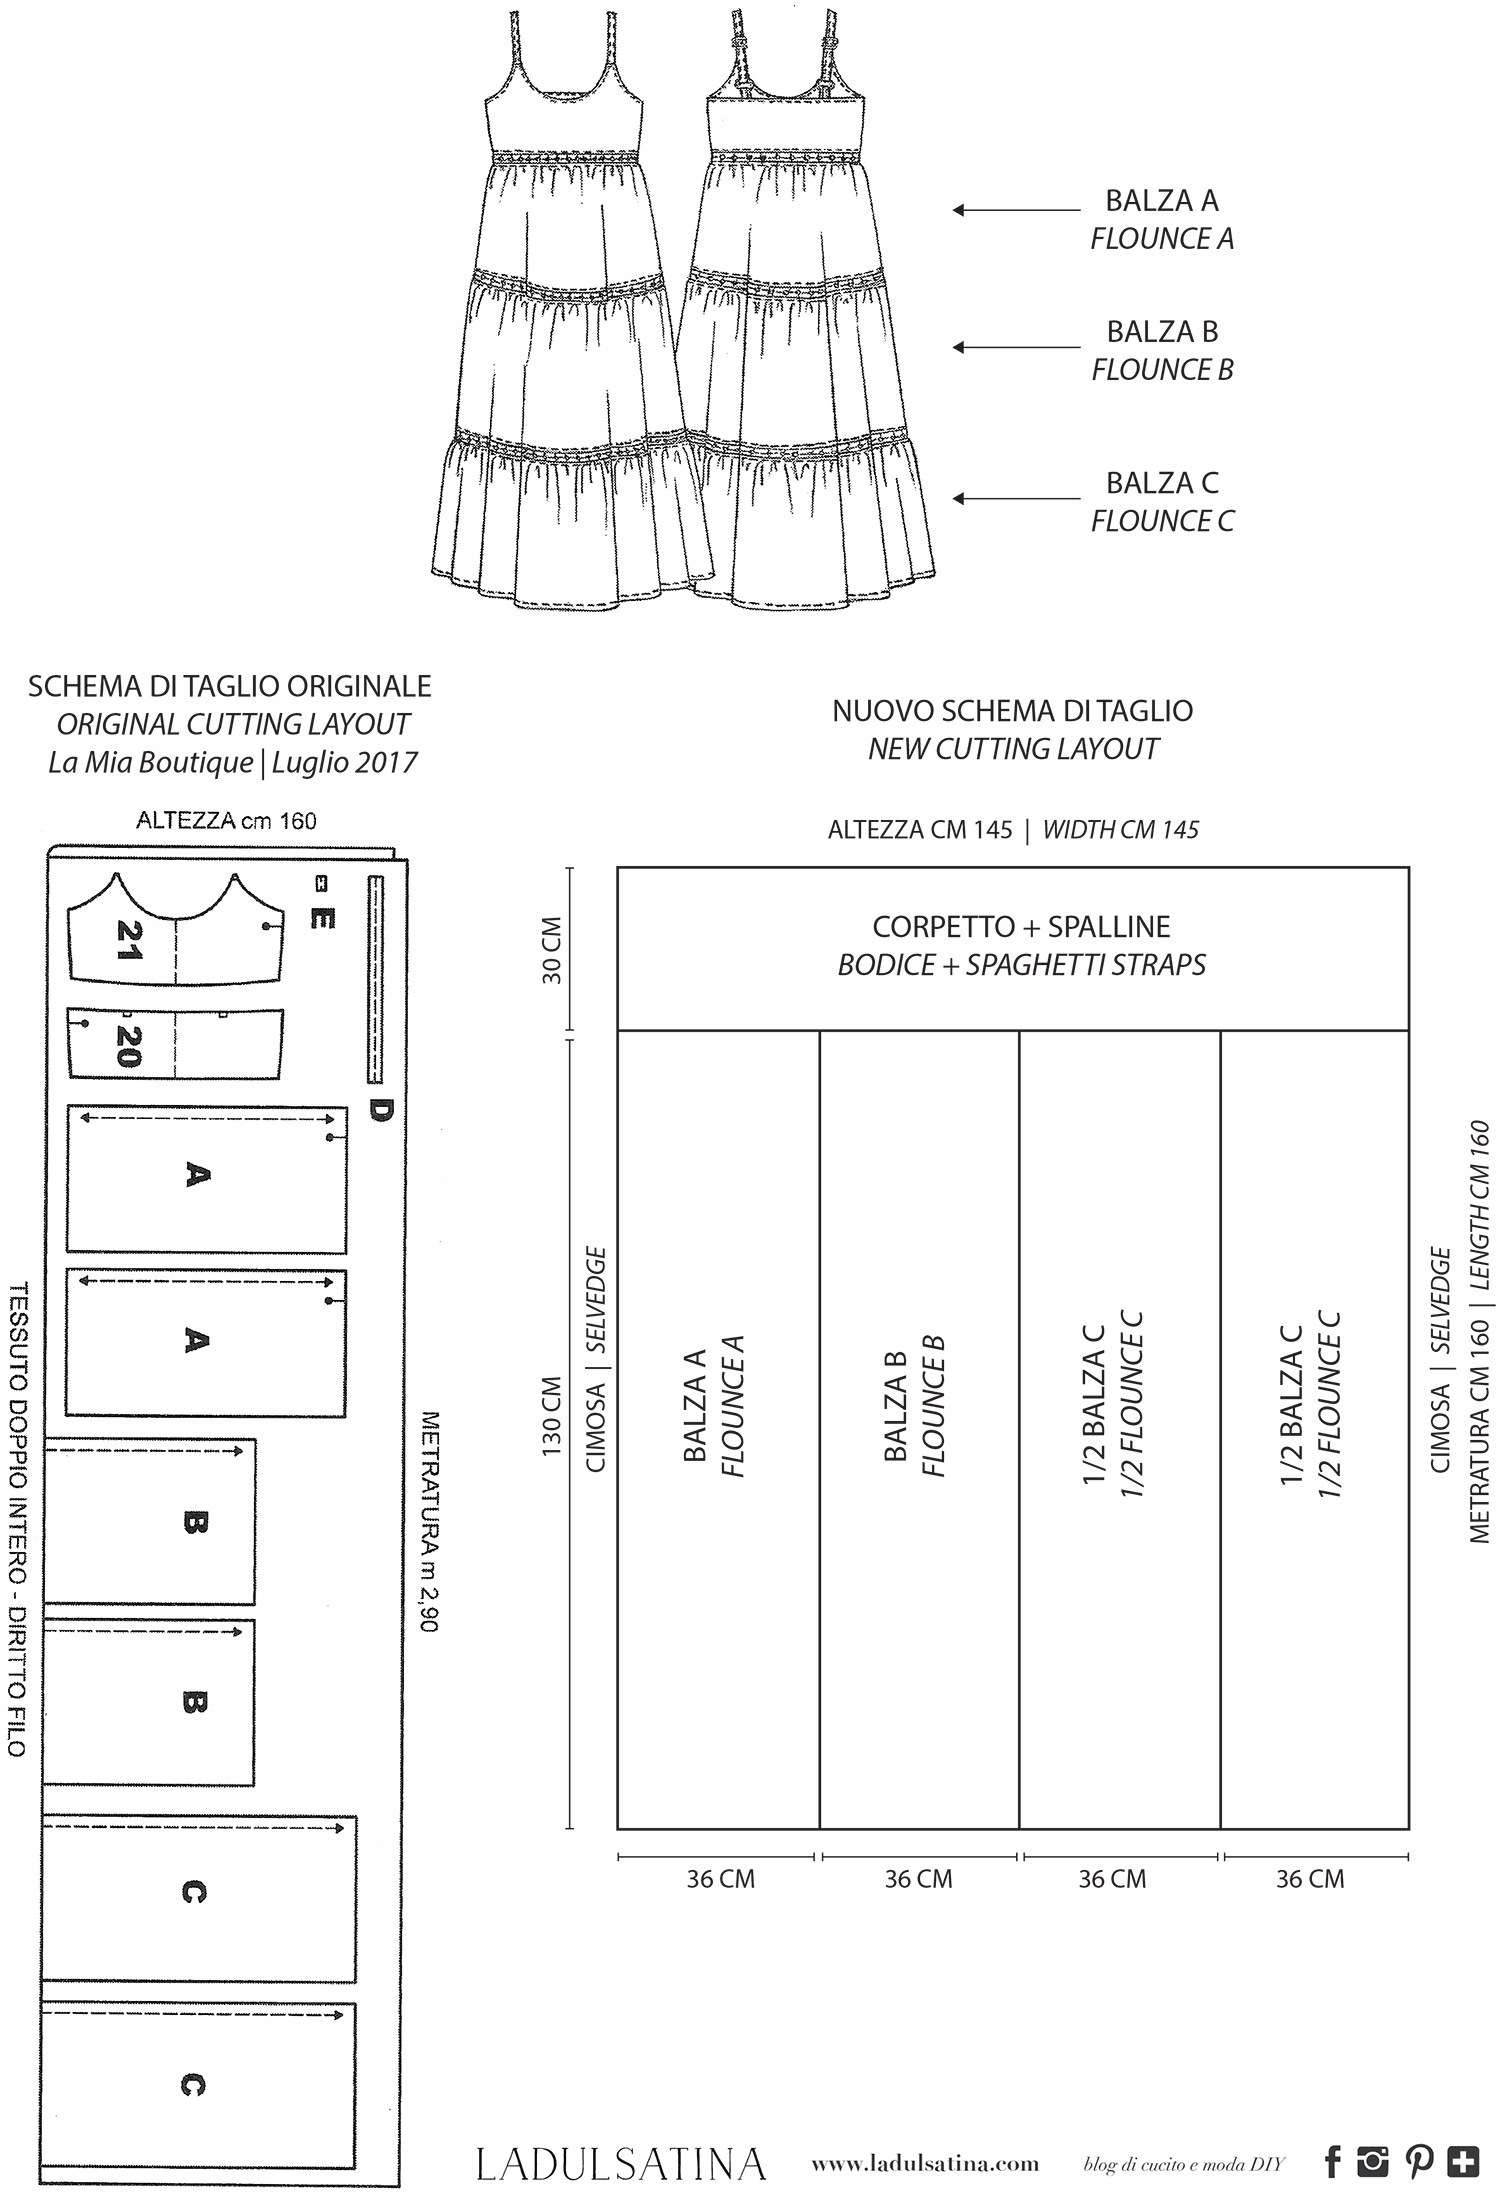 Ladulsatina - Sewing and DIY fashion blog - Gipsy Maxi Dress - Cutting layout